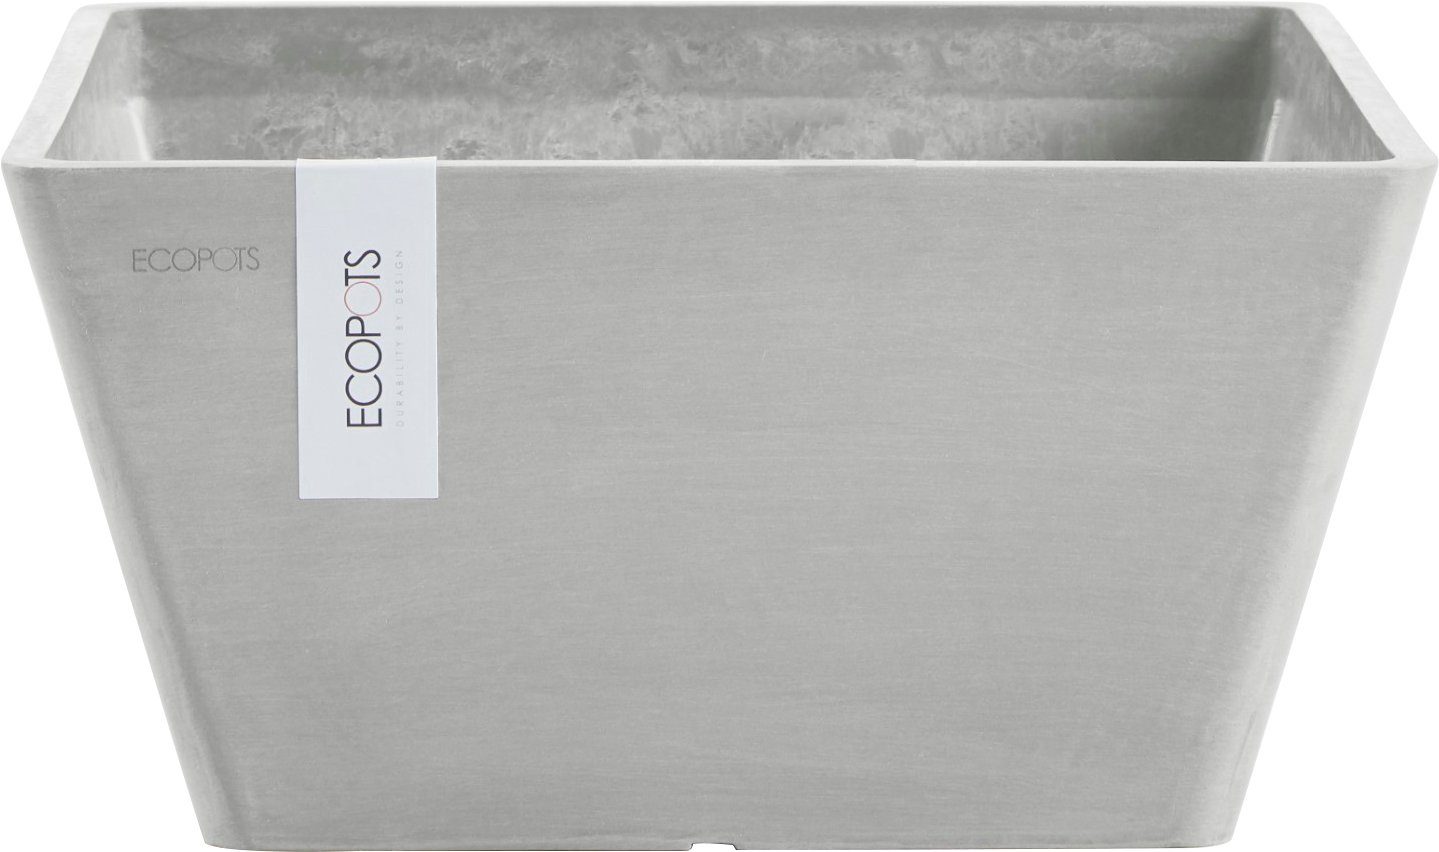 ECOPOTS Blumentopf BERLIN White 31x31x15,5 cm BxTxH: Grey